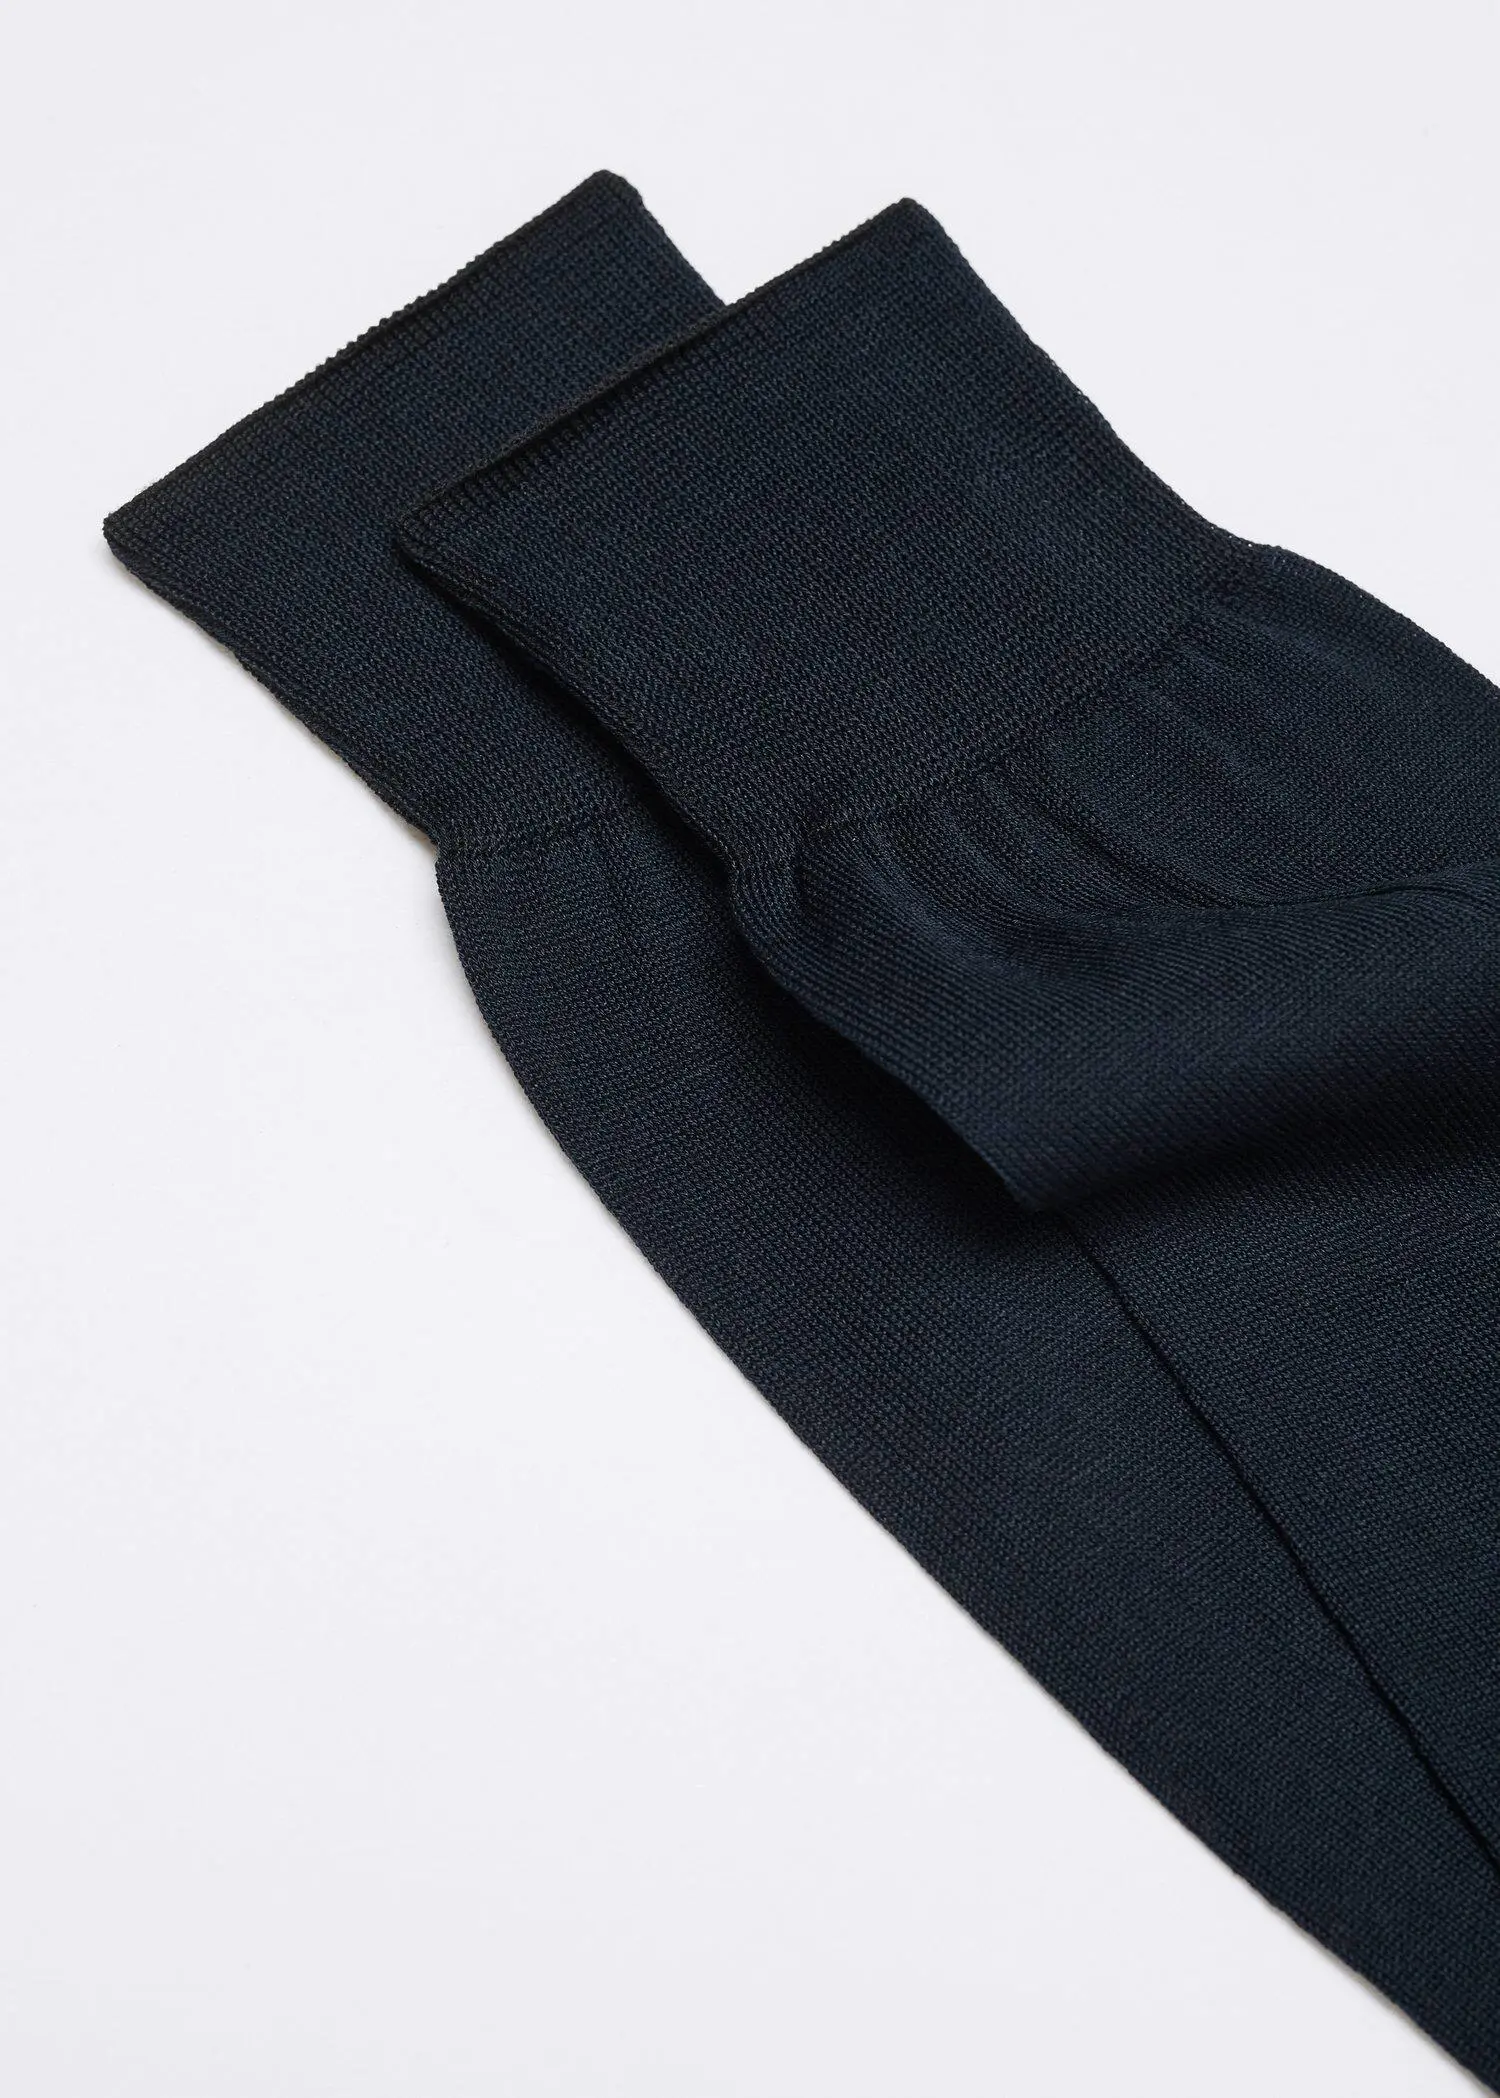 Mango Pack of 2 100% plain cotton socks. a close up of a pair of black socks. 